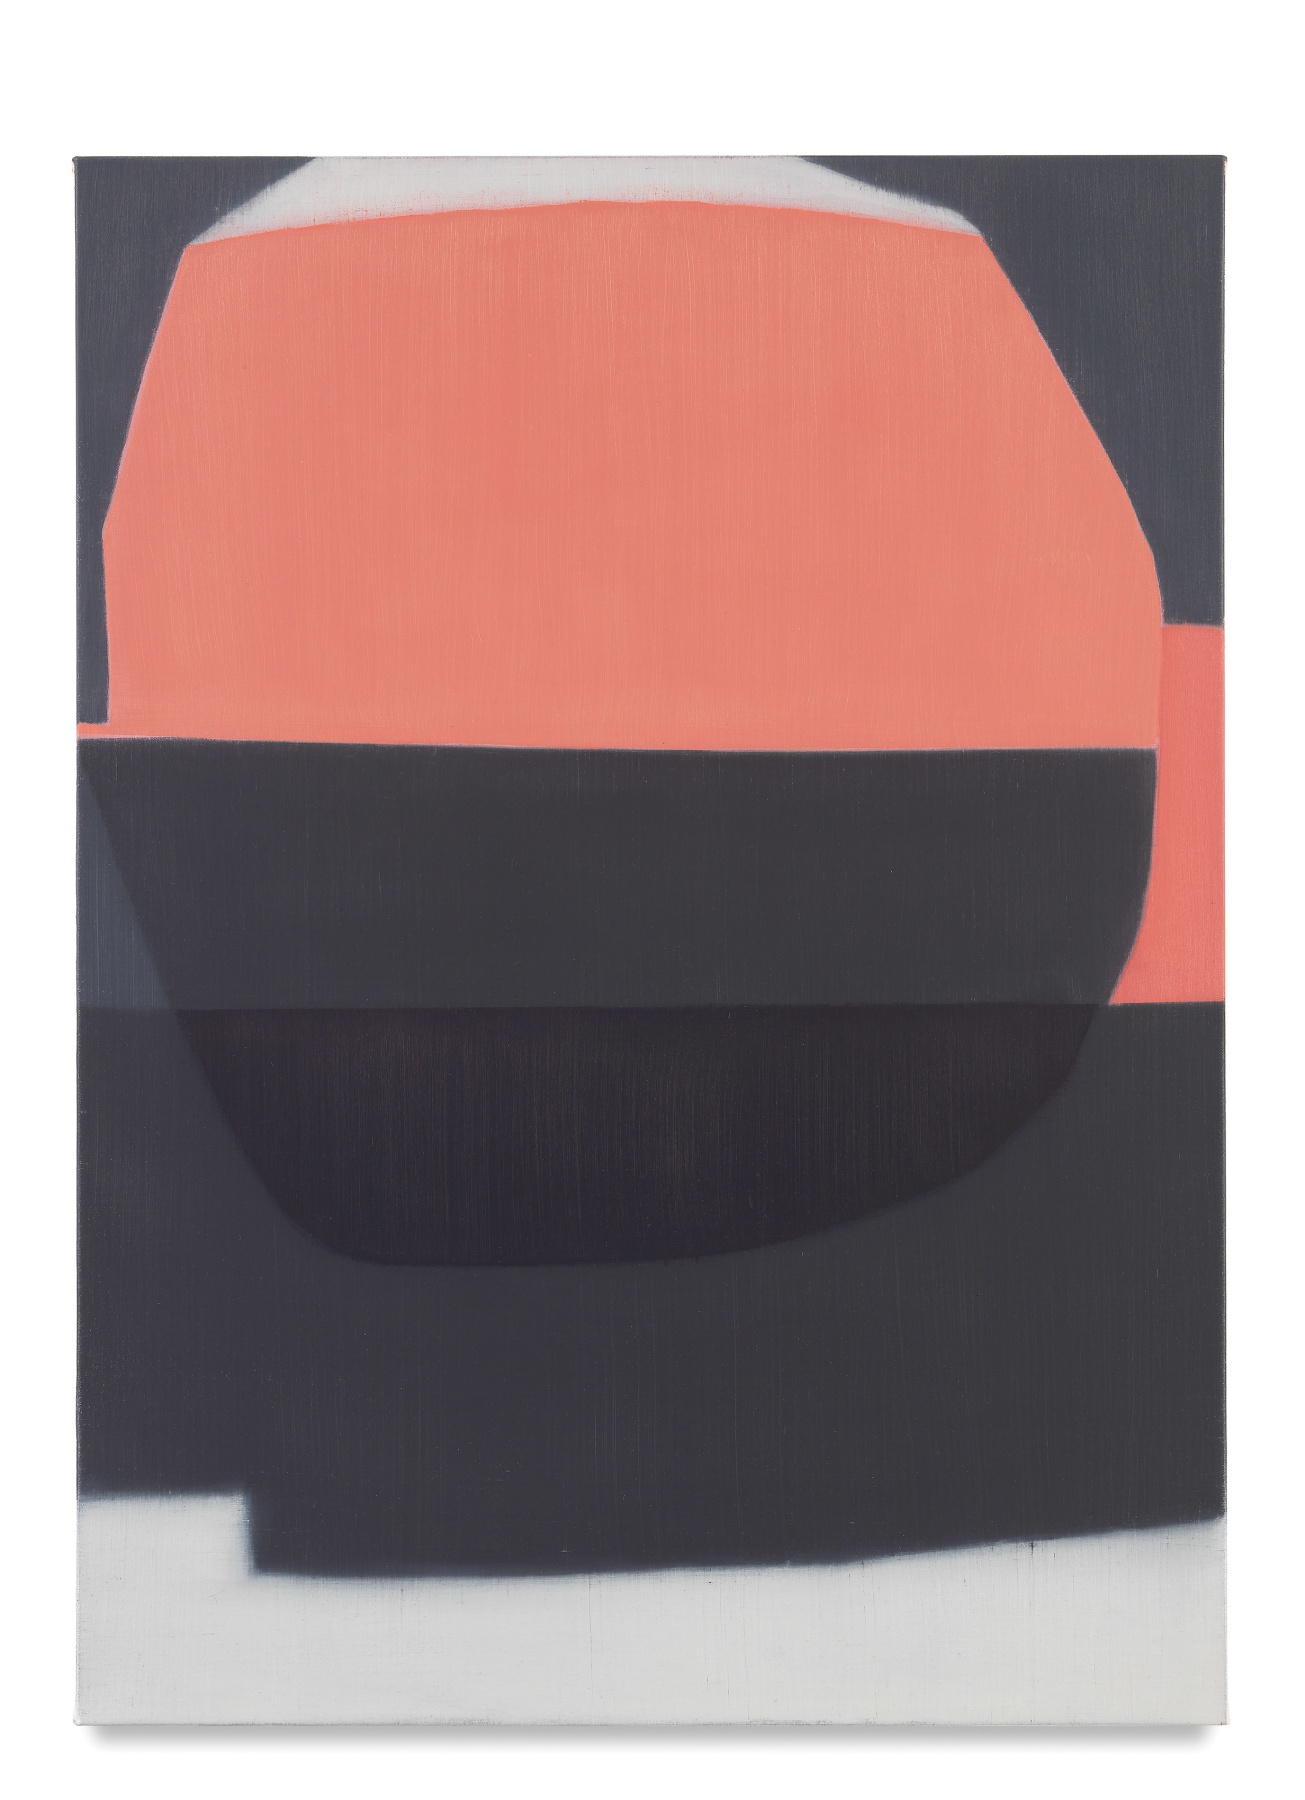 Suzanne Caporael, 714 (Sun, moon, kiss, eclipse), 2016, Oil on linen